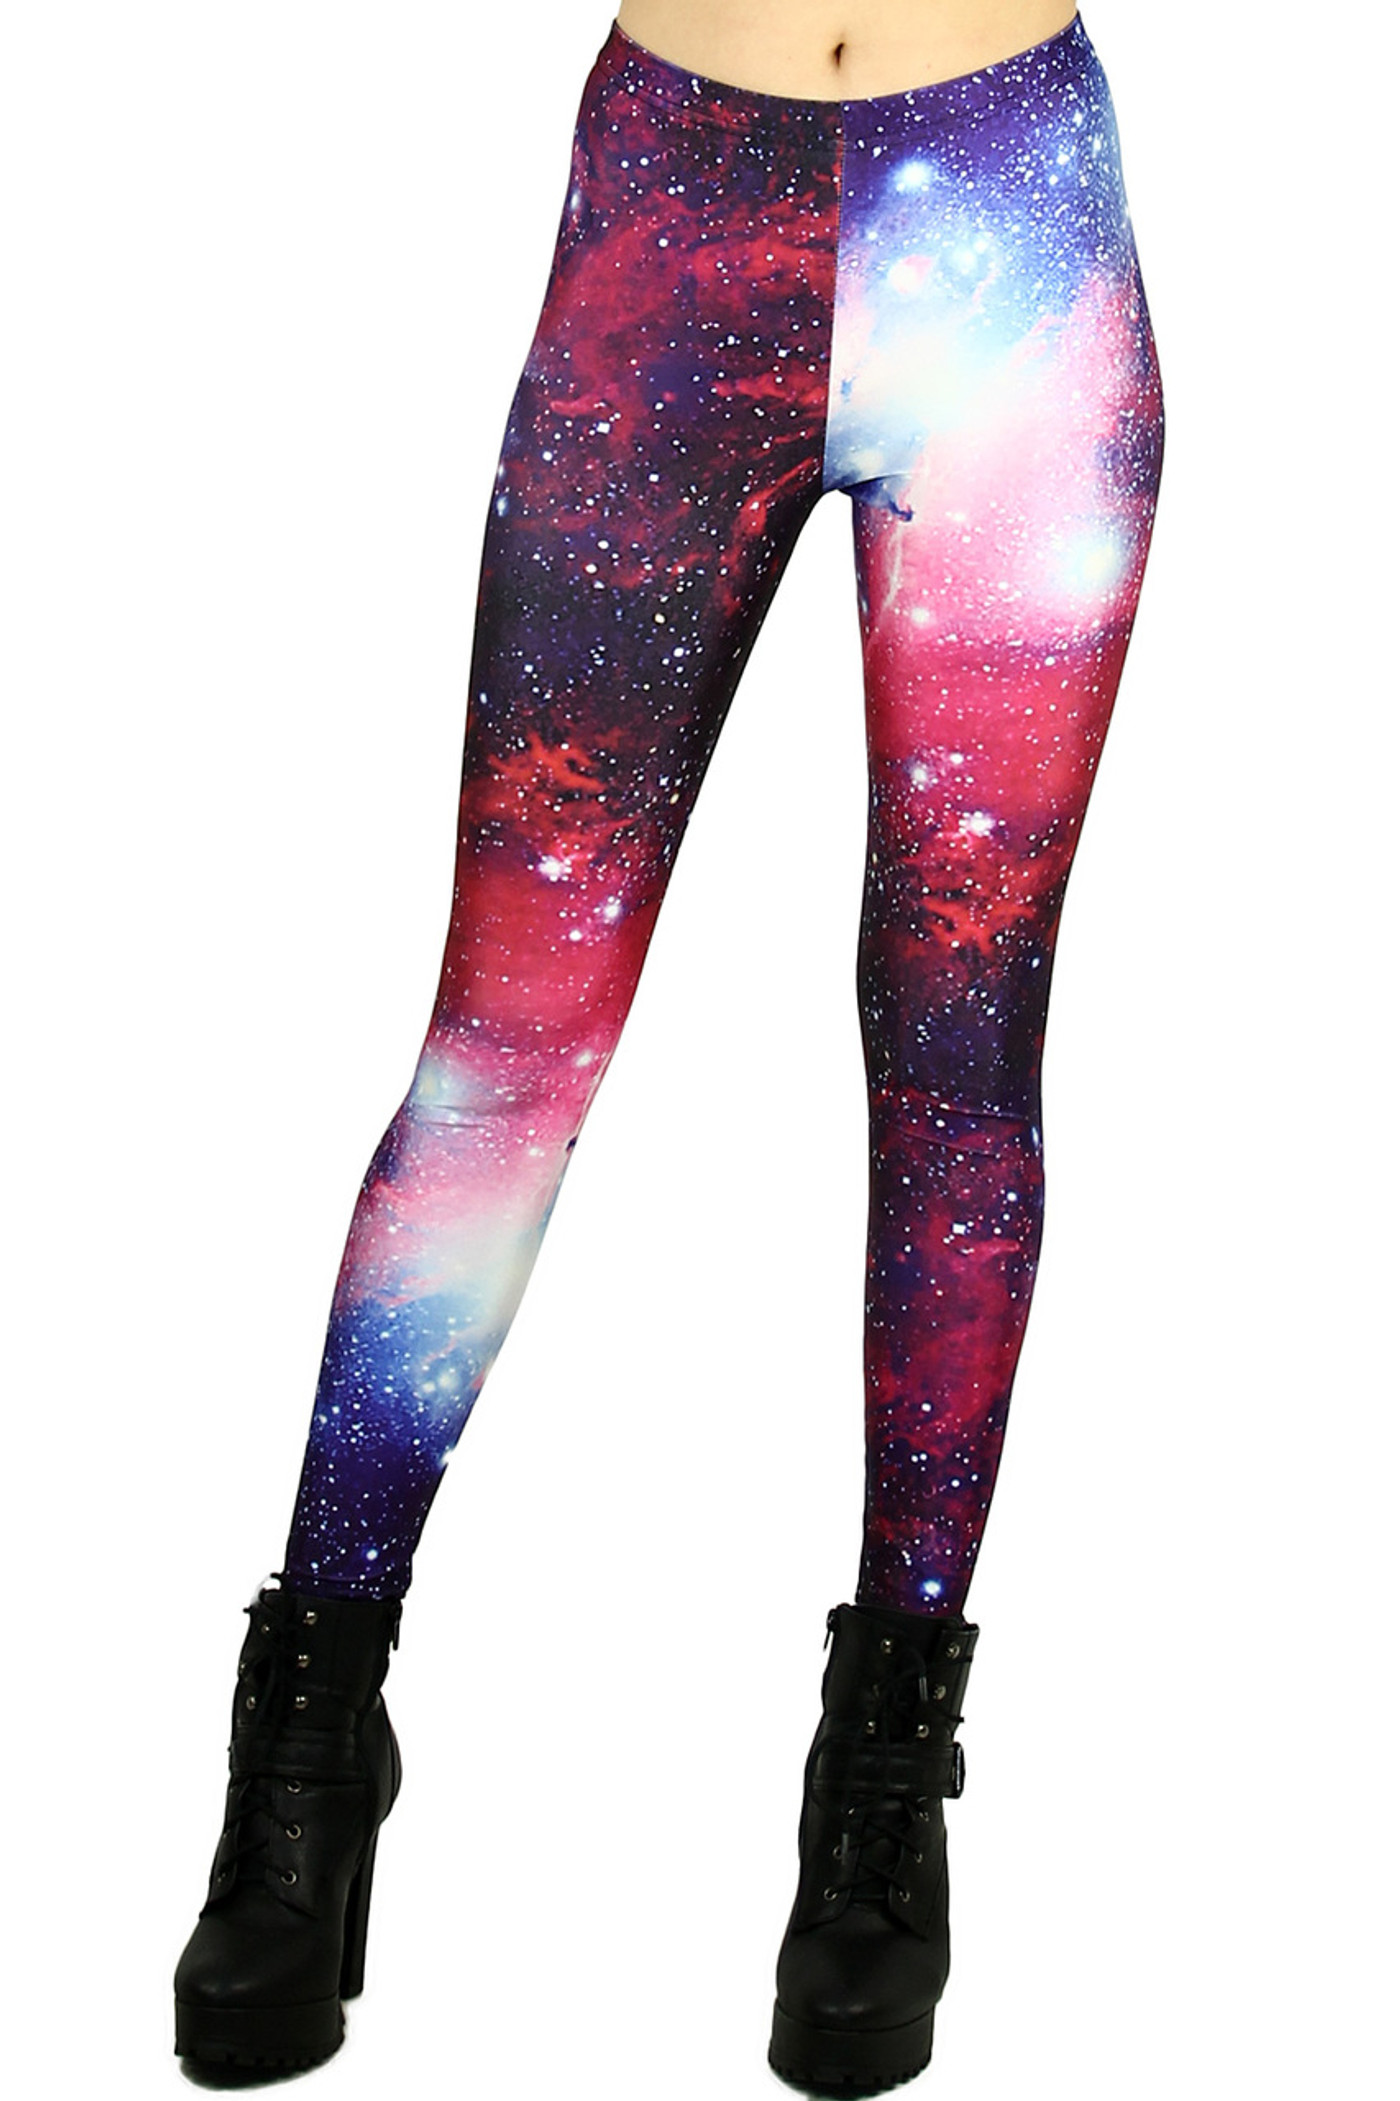 Epic Galaxy Leggings